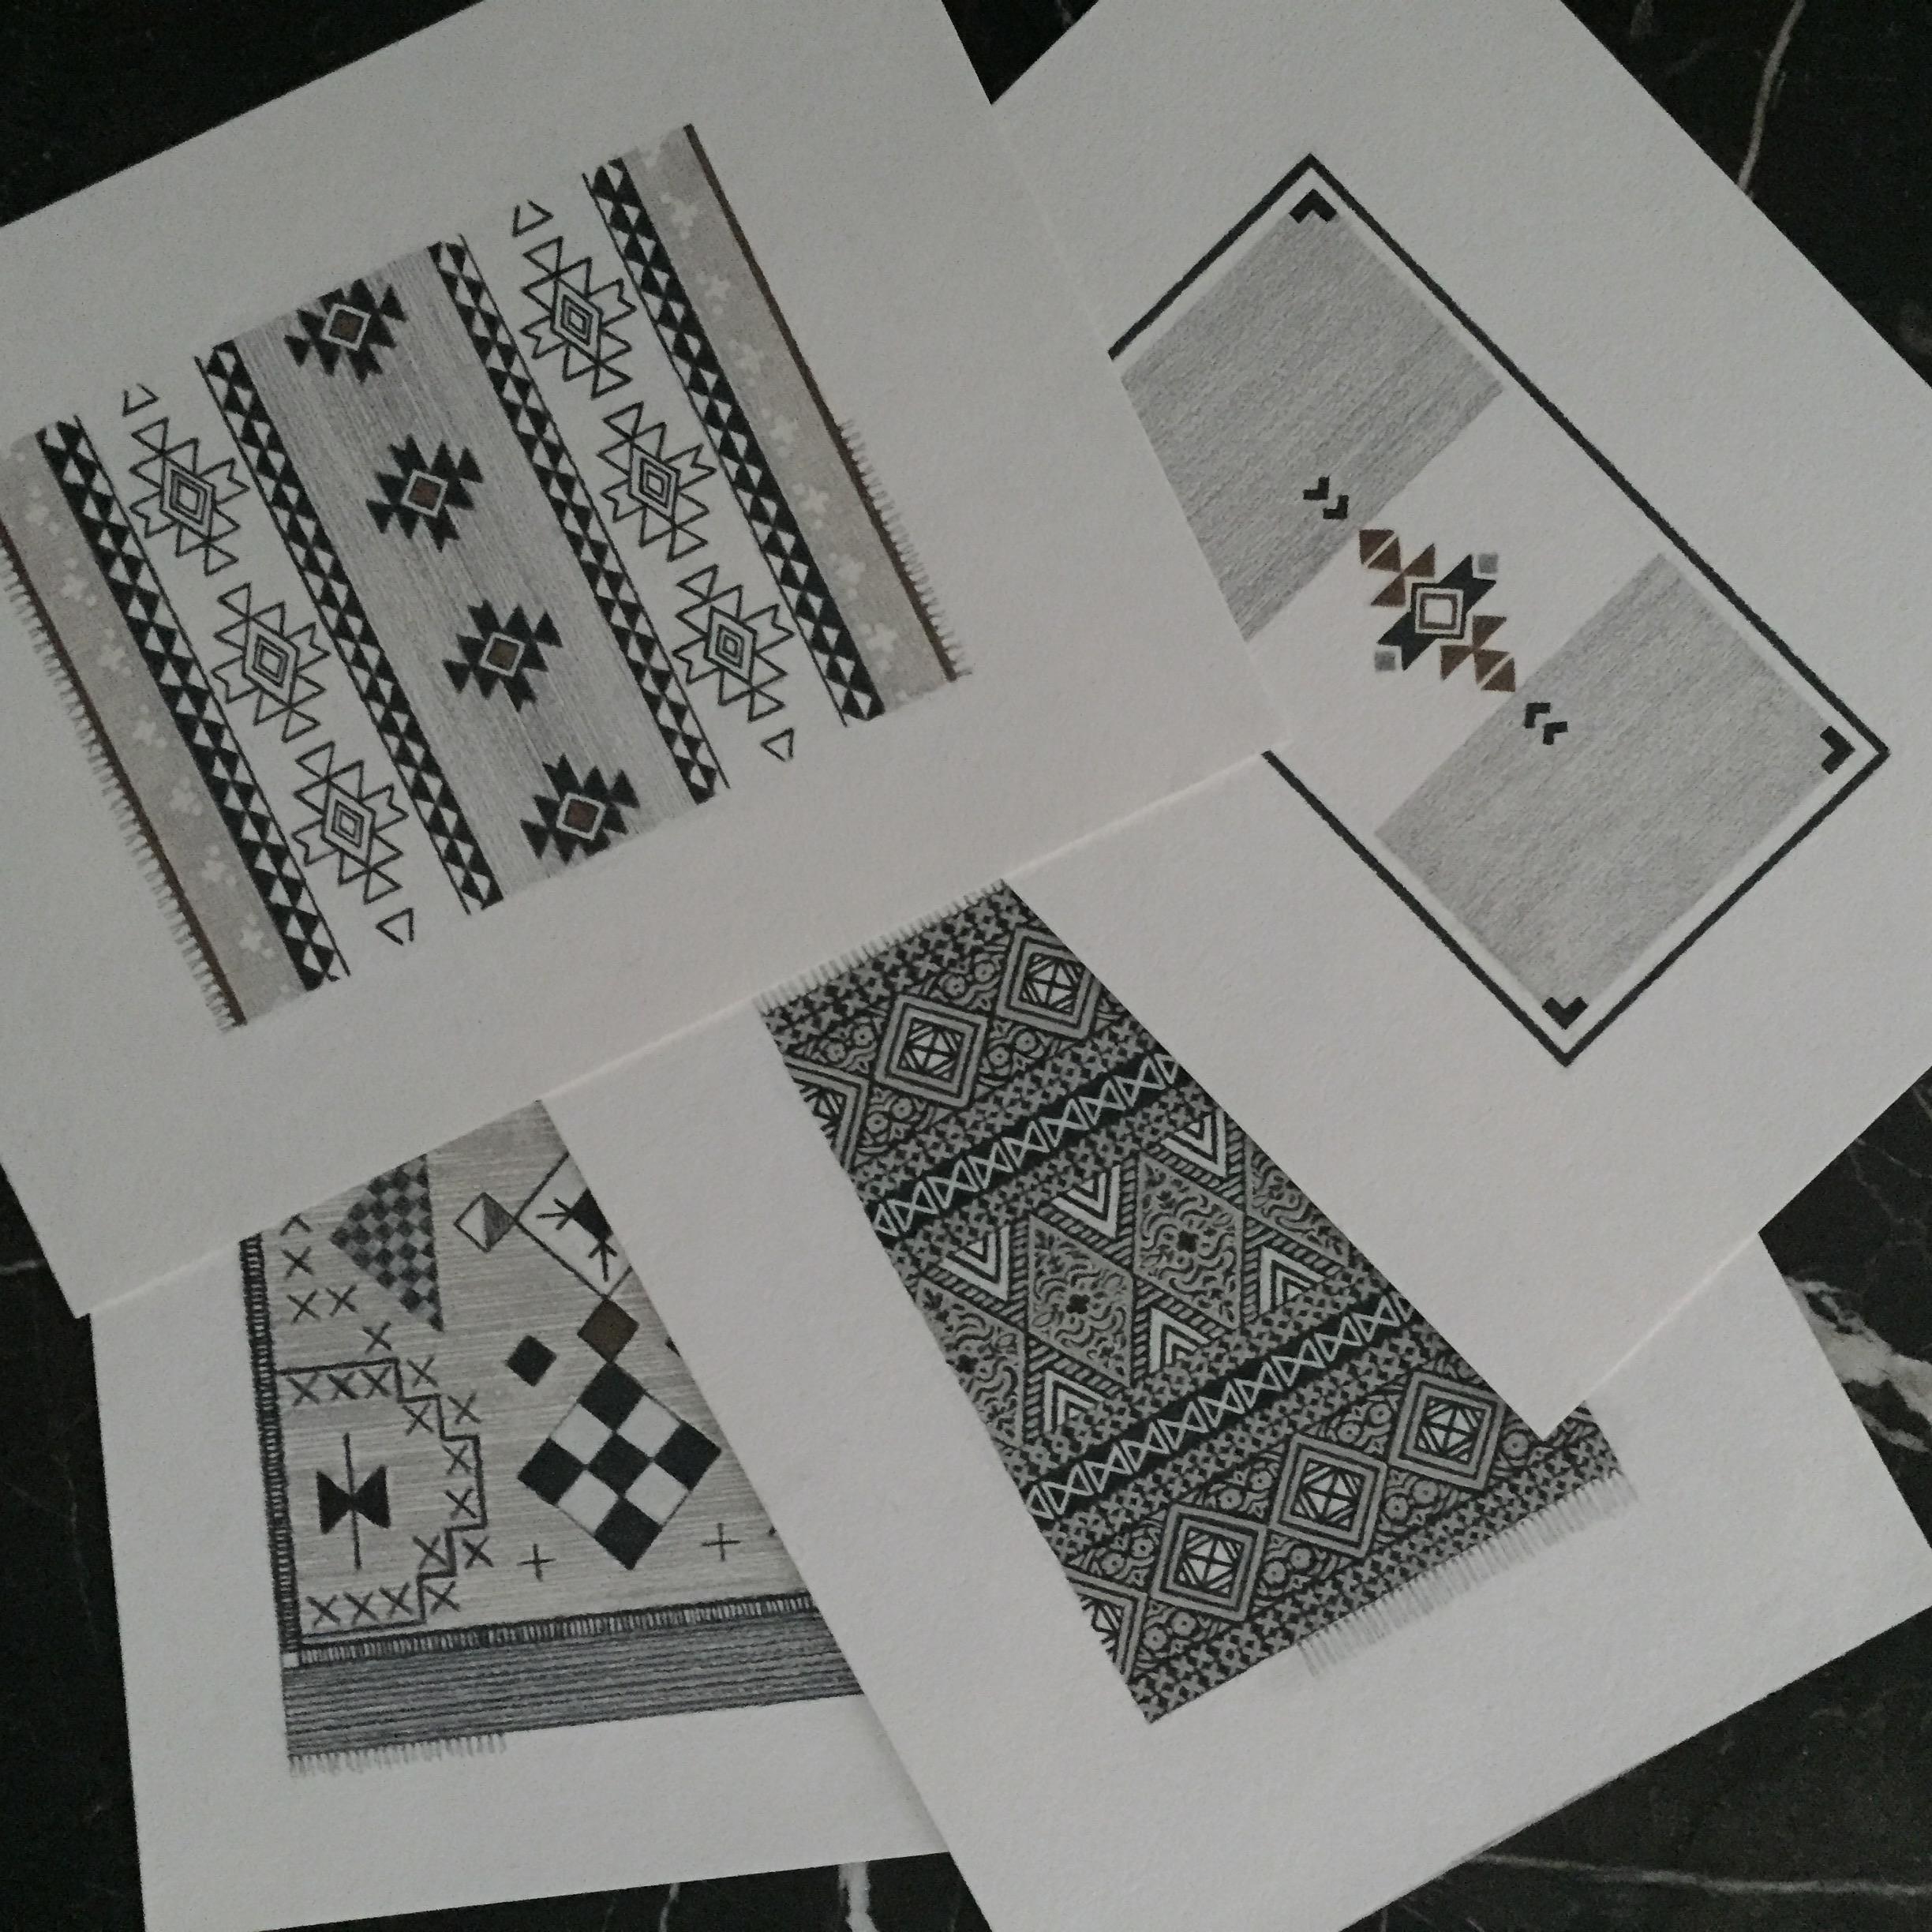 Magic Carpet Ride 4 (Navajo Inspired, Geometric Design, Black and White Artwork) For Sale 7